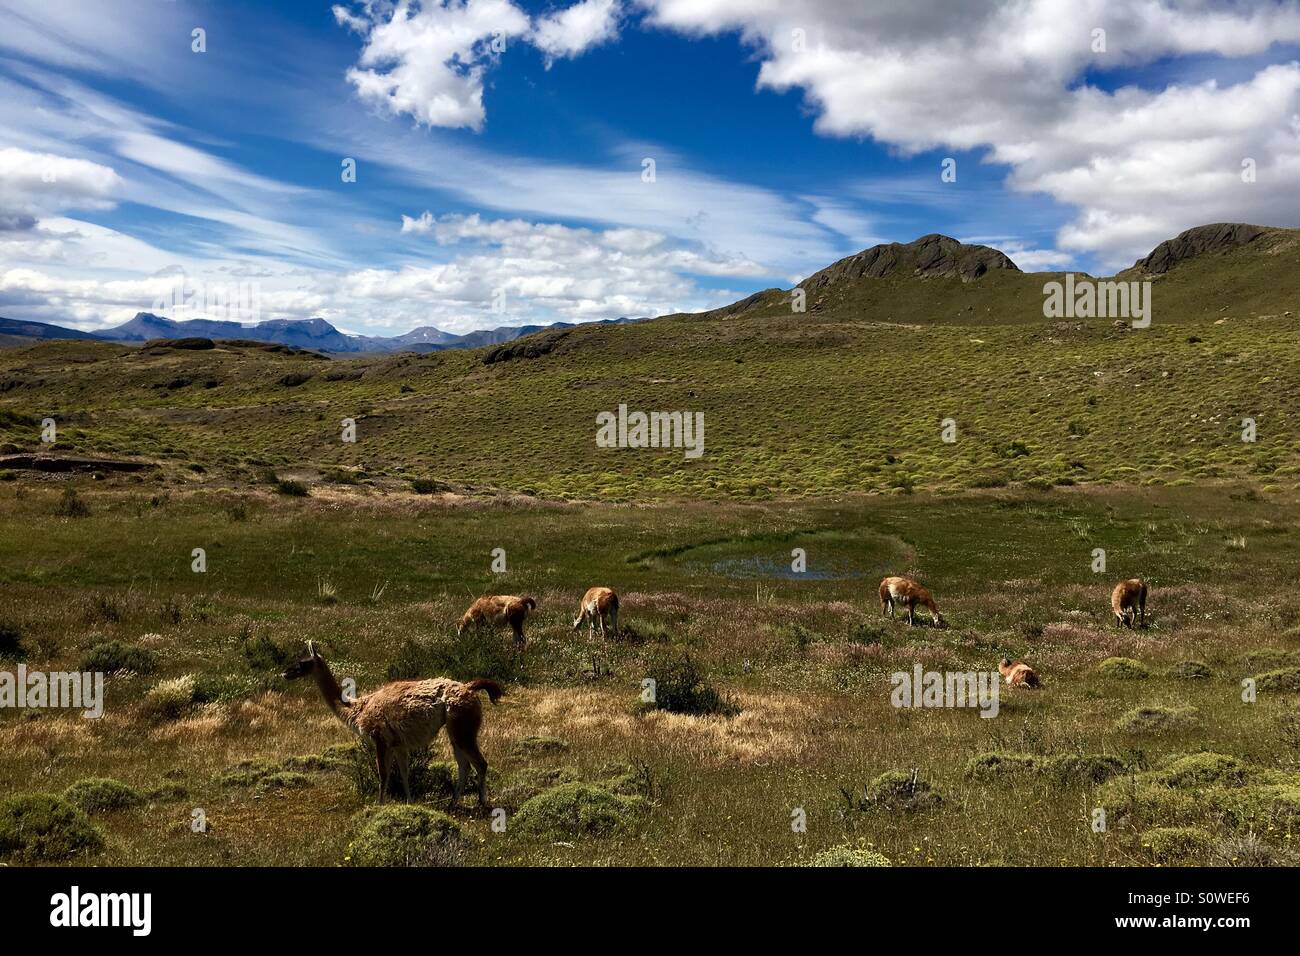 Un gruppo fo lhama nel Parco Nazionale Torres del Paine il Jan 09, 2016. Foto Rodrigo Baleia Foto Stock